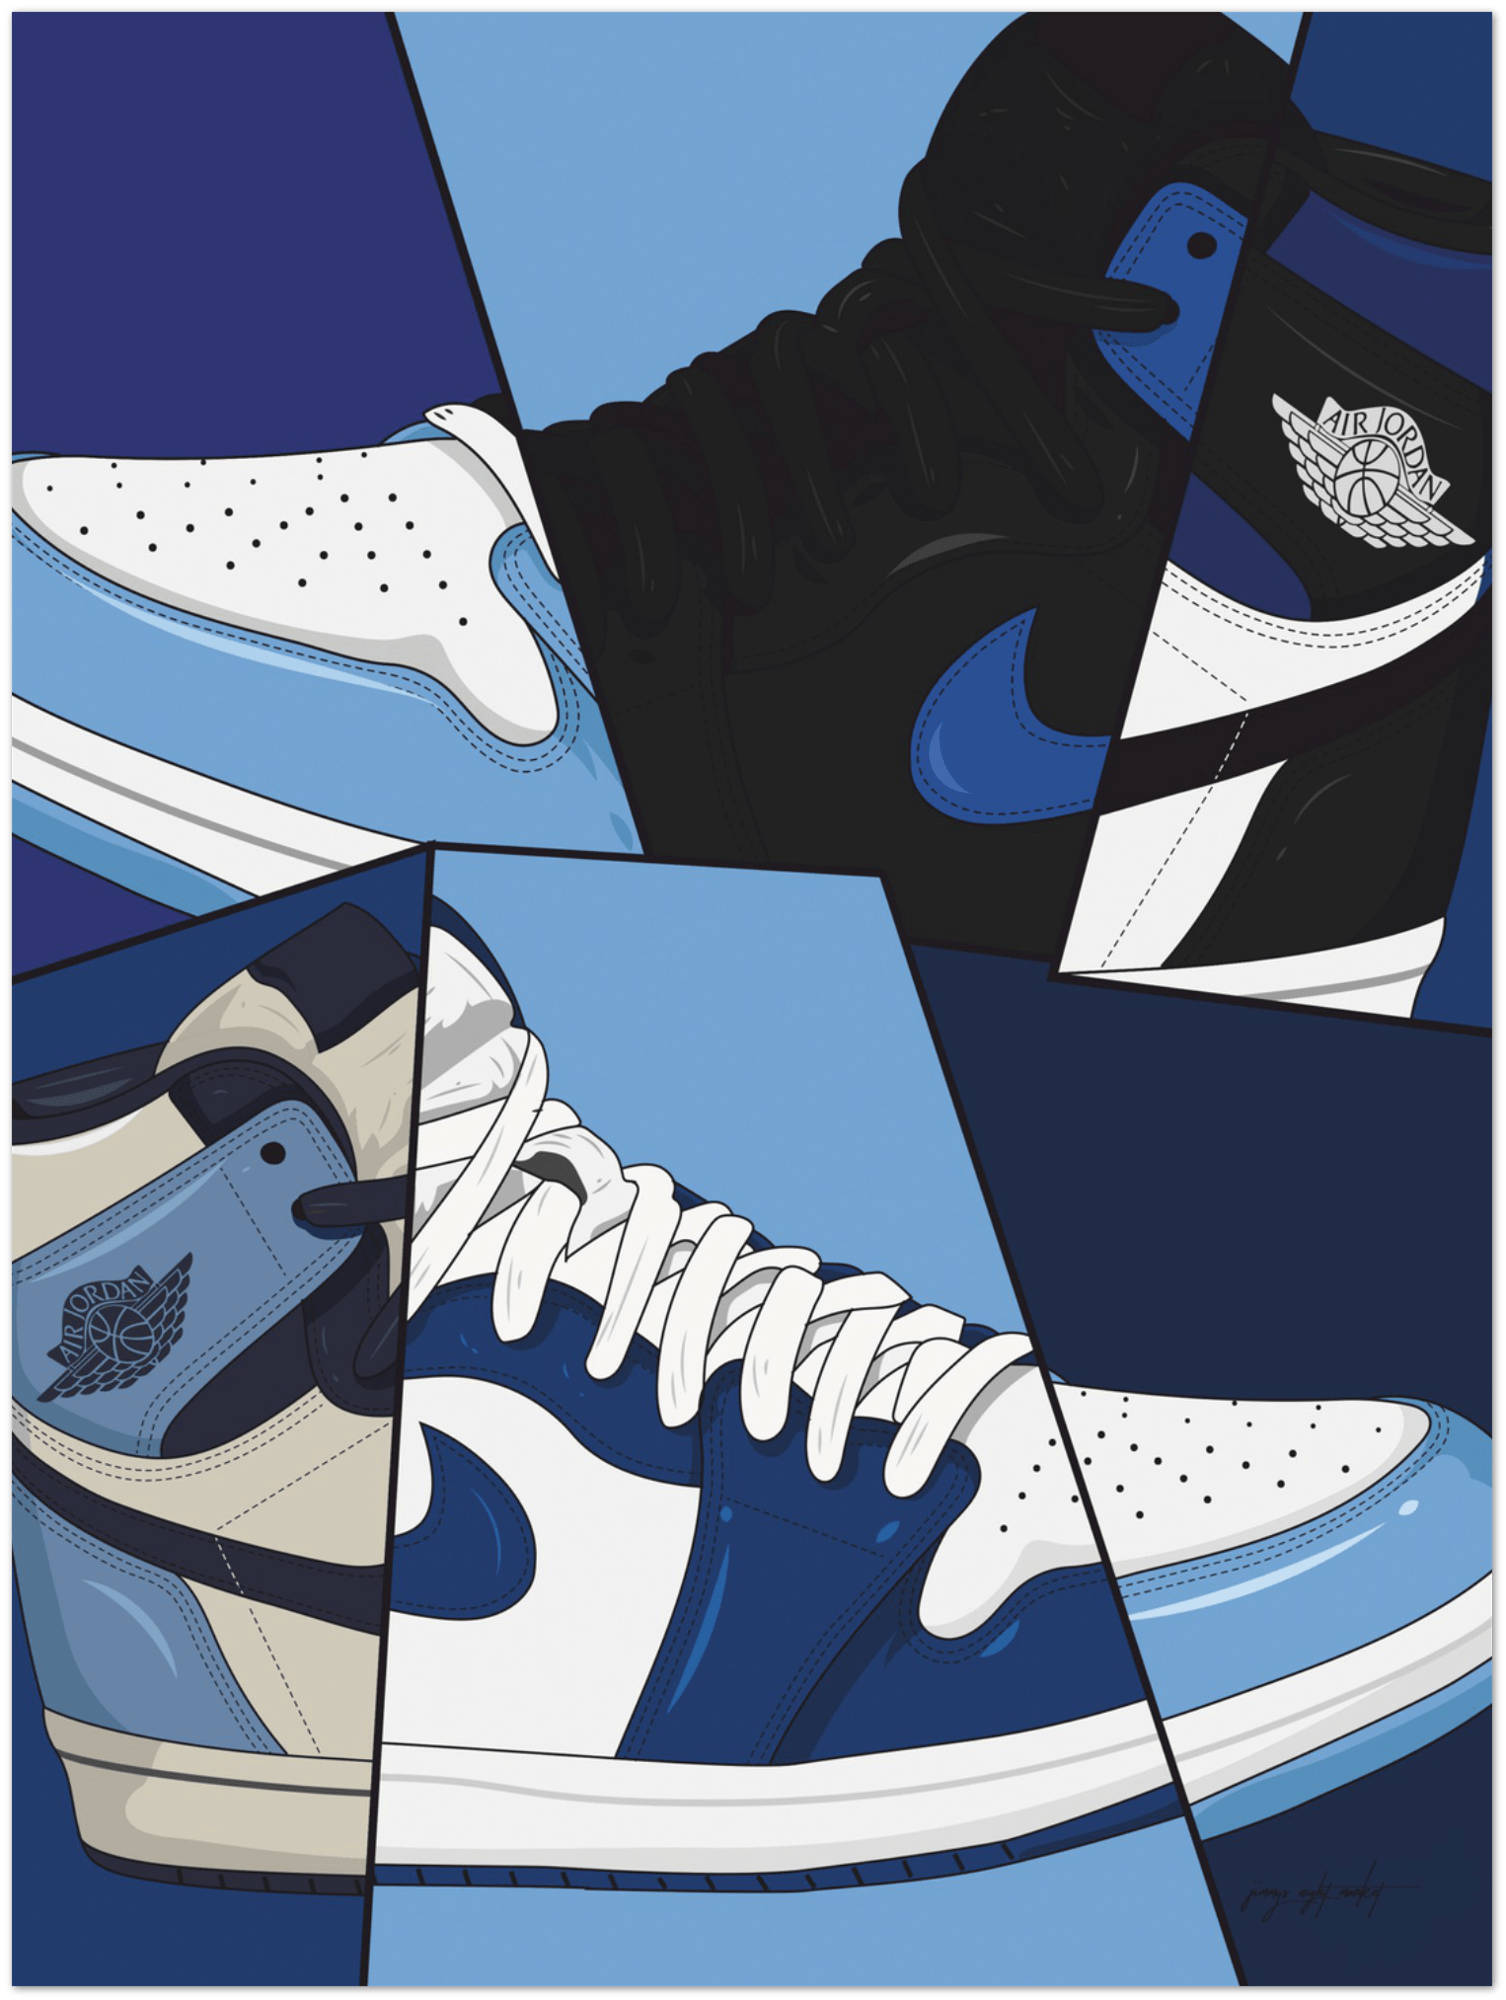 Blue Jordan Shoes Wallpapers - Top Free Blue Jordan Shoes Backgrounds ...